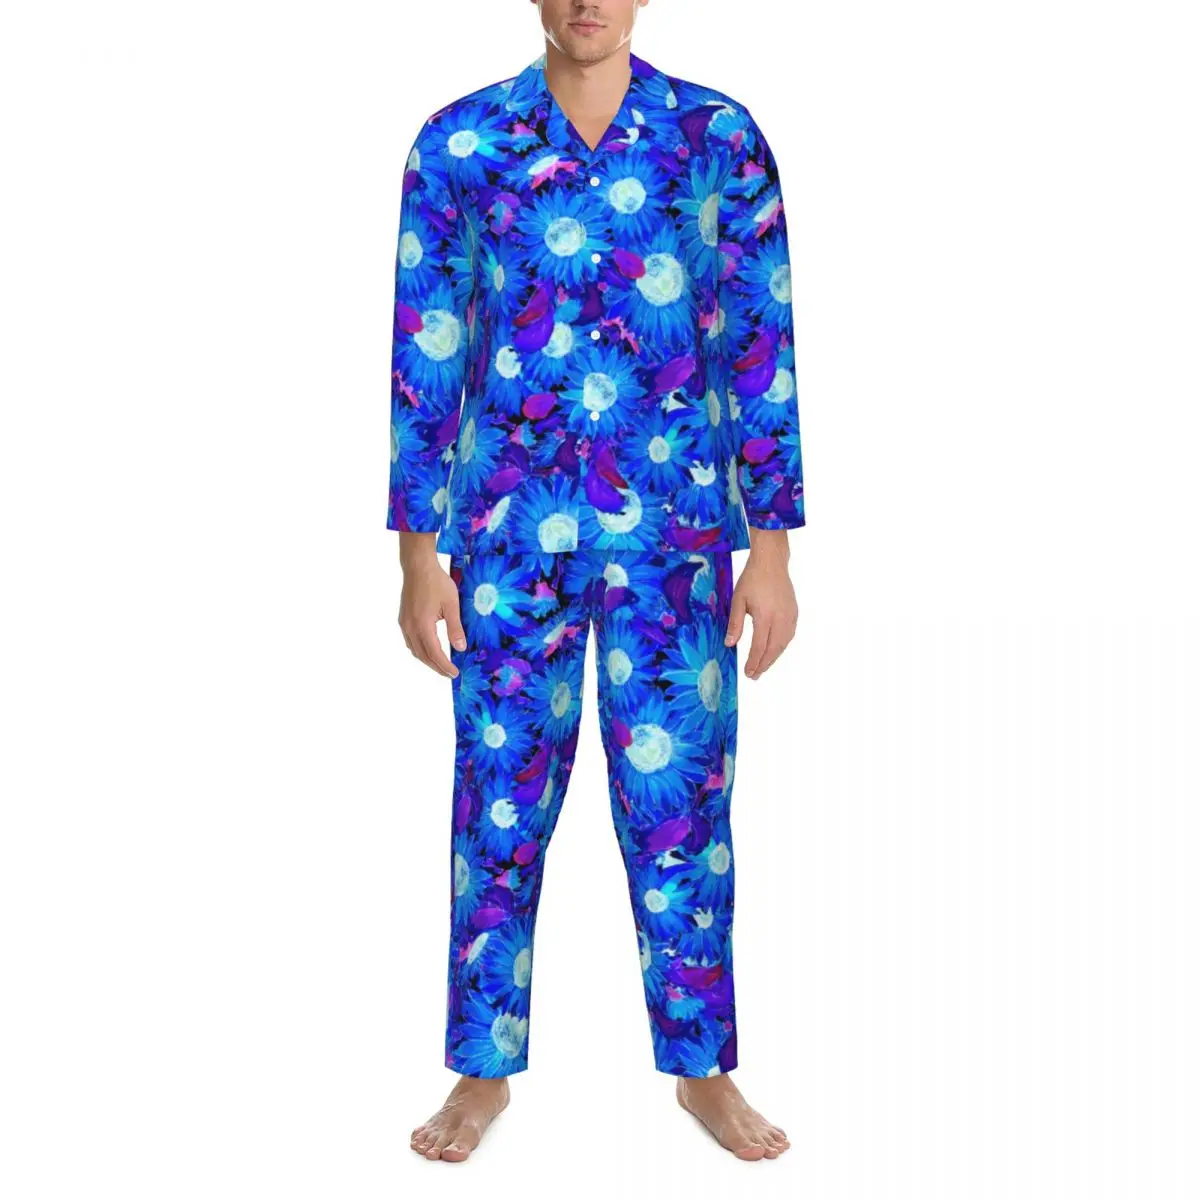 

Blue And Purple Sunflower Pajamas Men Floral Print Trendy Home Sleepwear Autumn 2 Piece Casual Oversized Pattern Pajama Sets